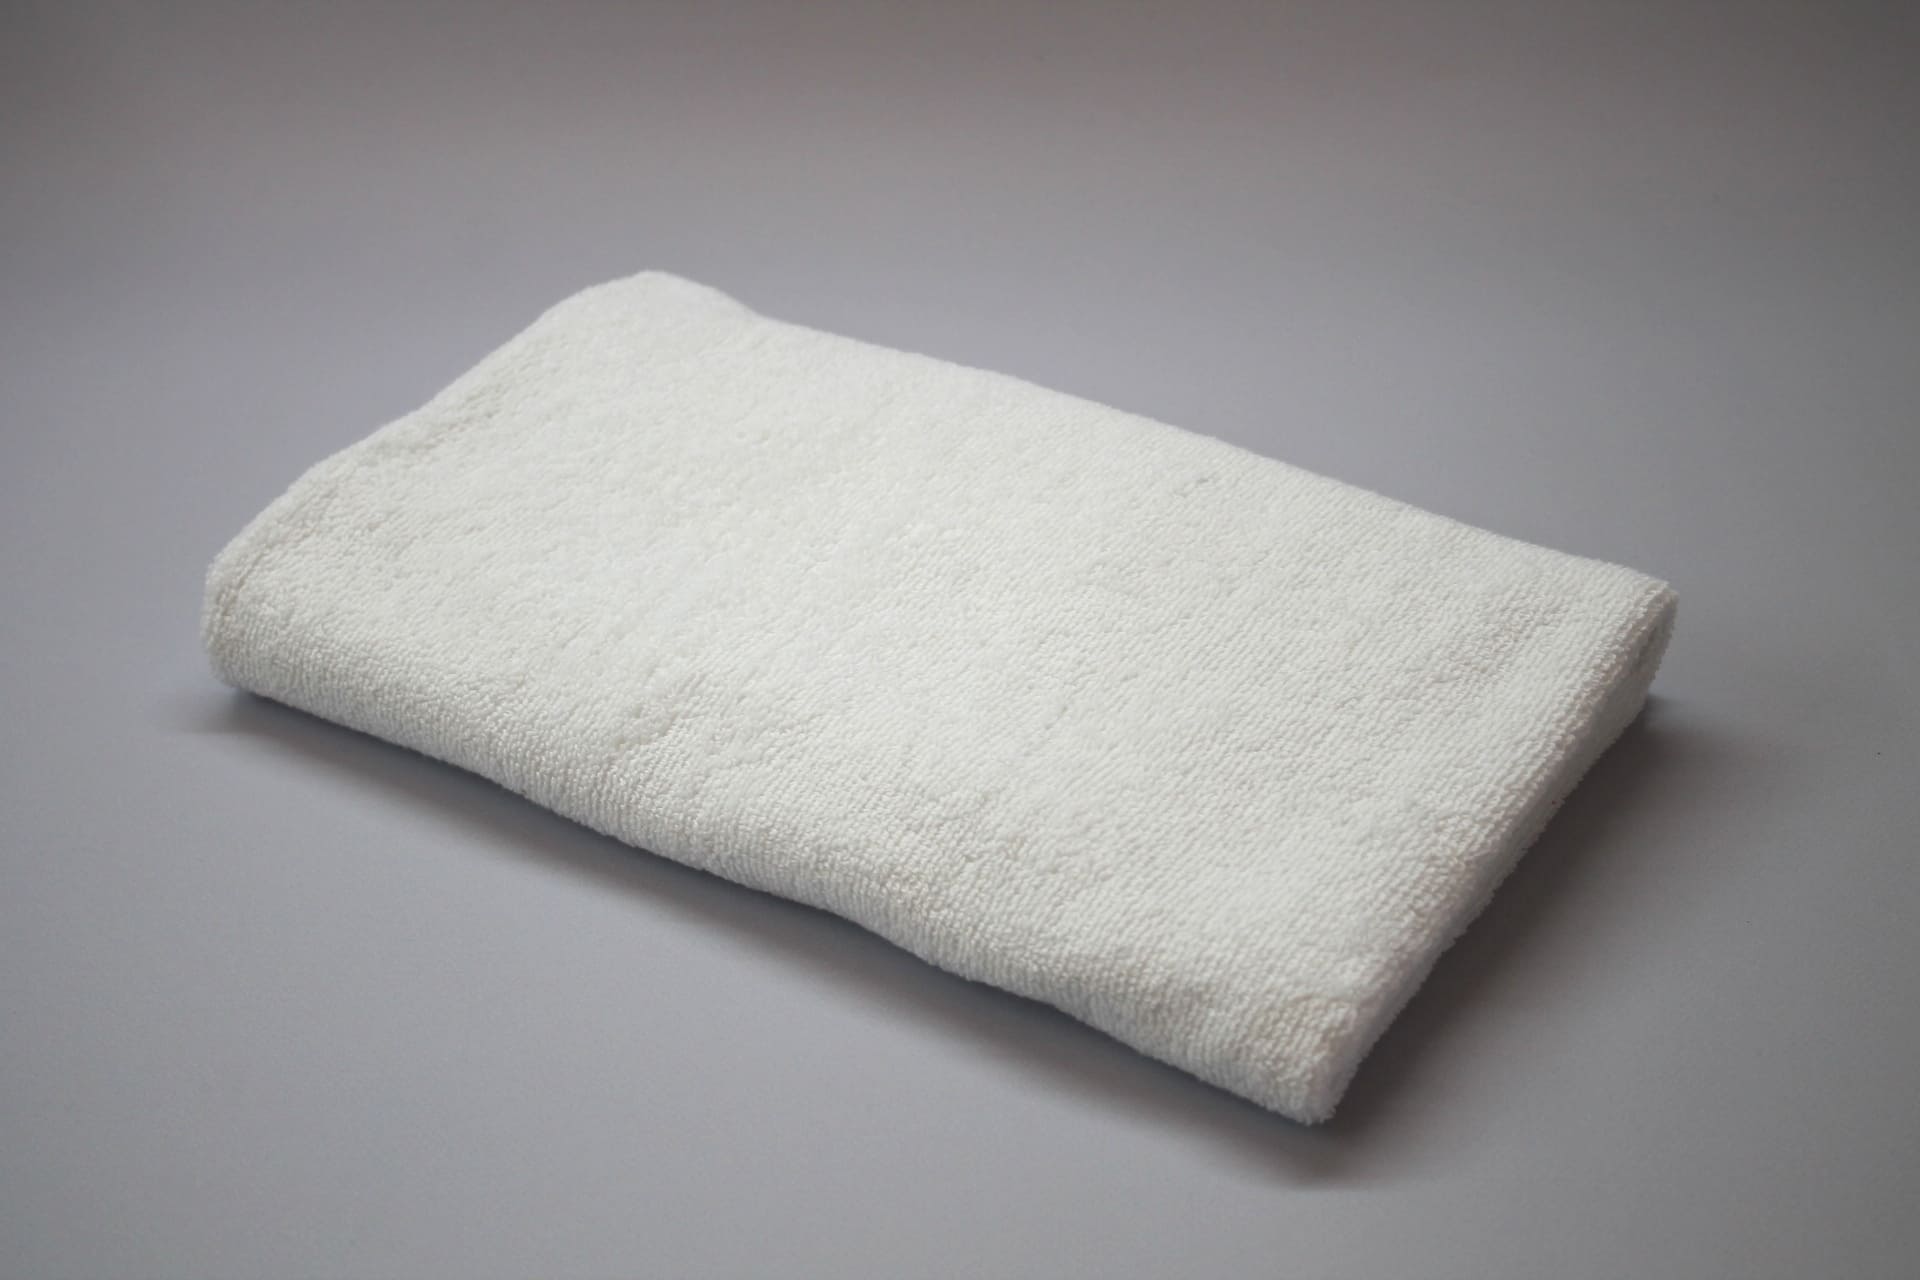 Окпд полотенце махровое. Белое махровое полотенце сложено углом.